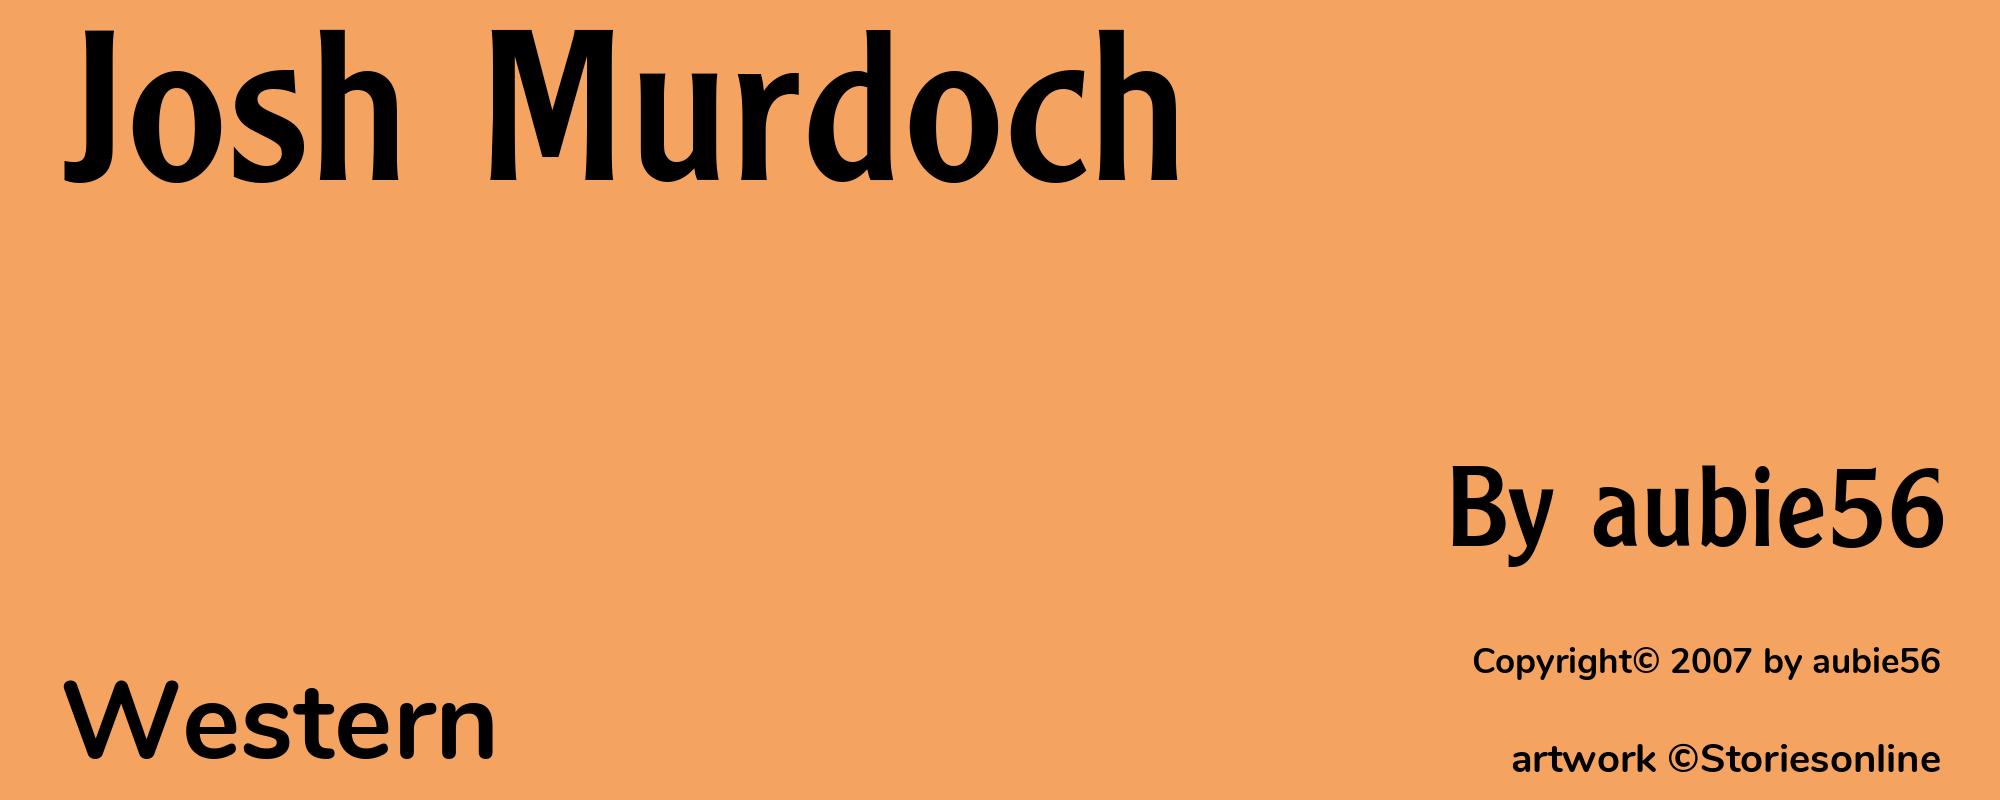 Josh Murdoch - Cover